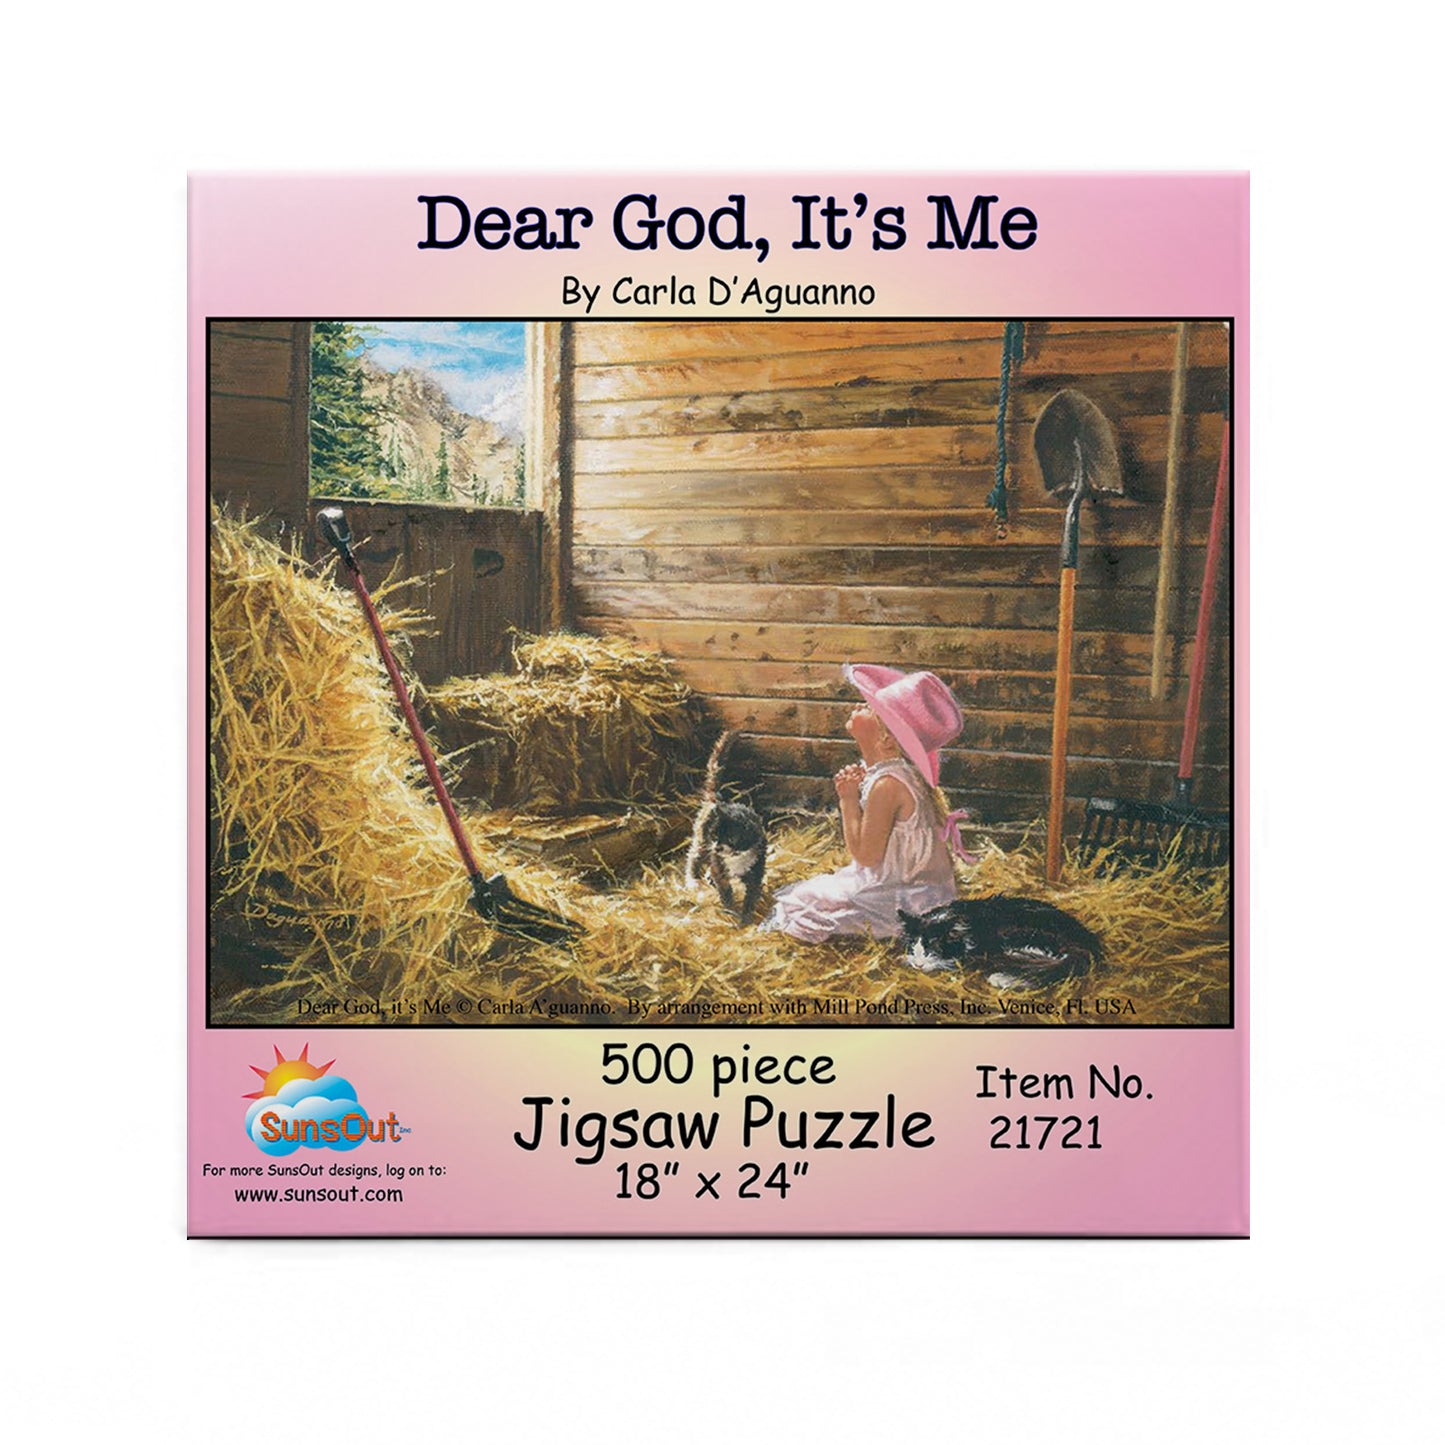 Dear God It's Me - 500 Piece Jigsaw Puzzle